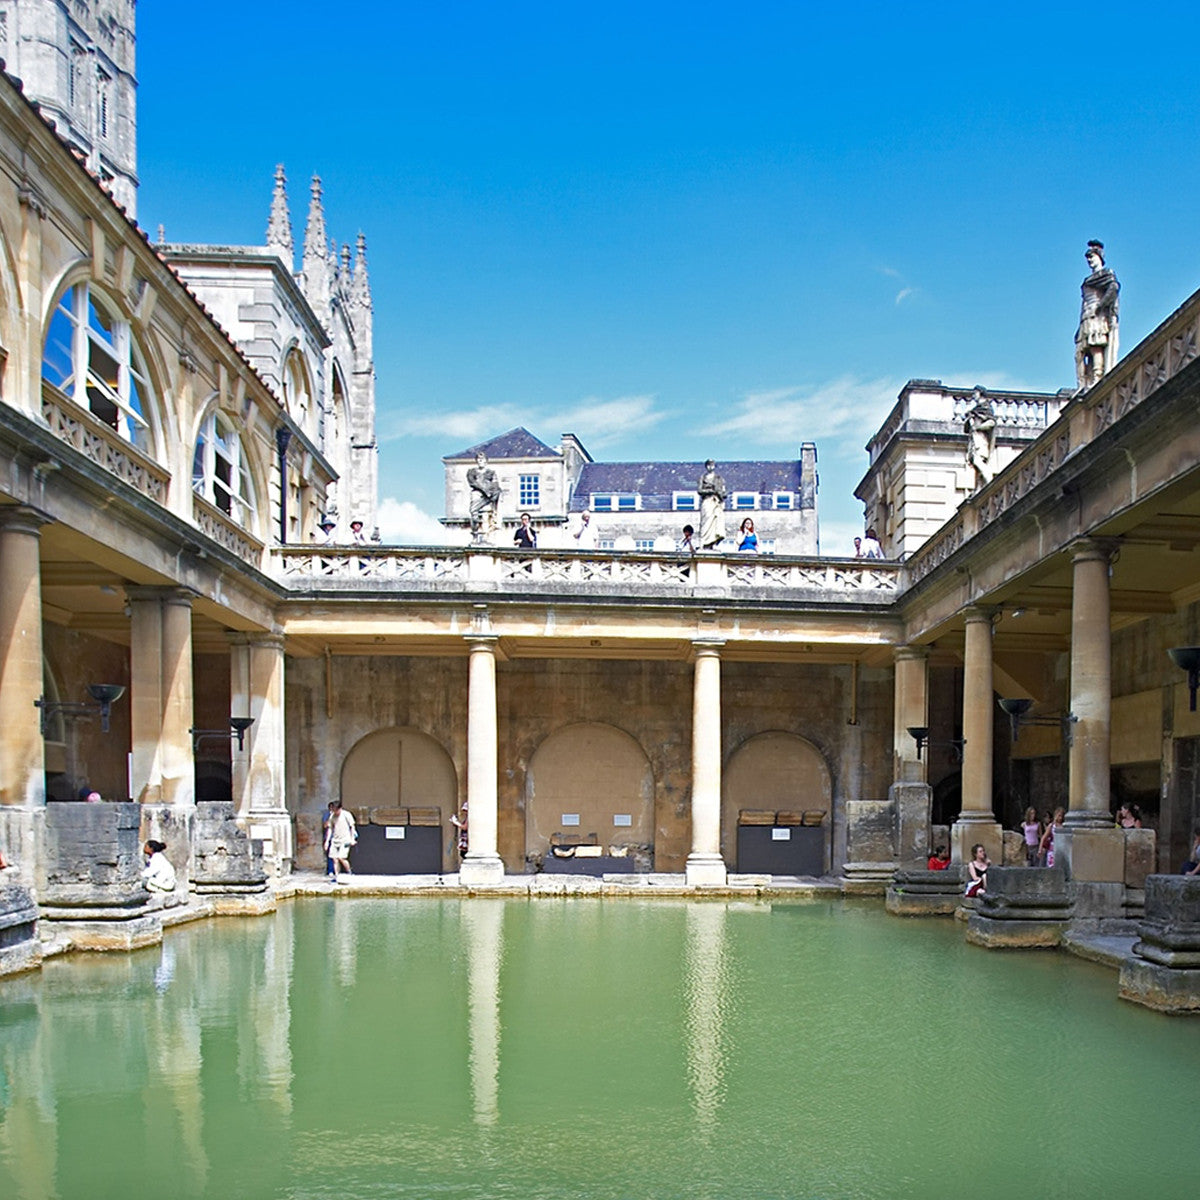 Roman Adventures in Bath